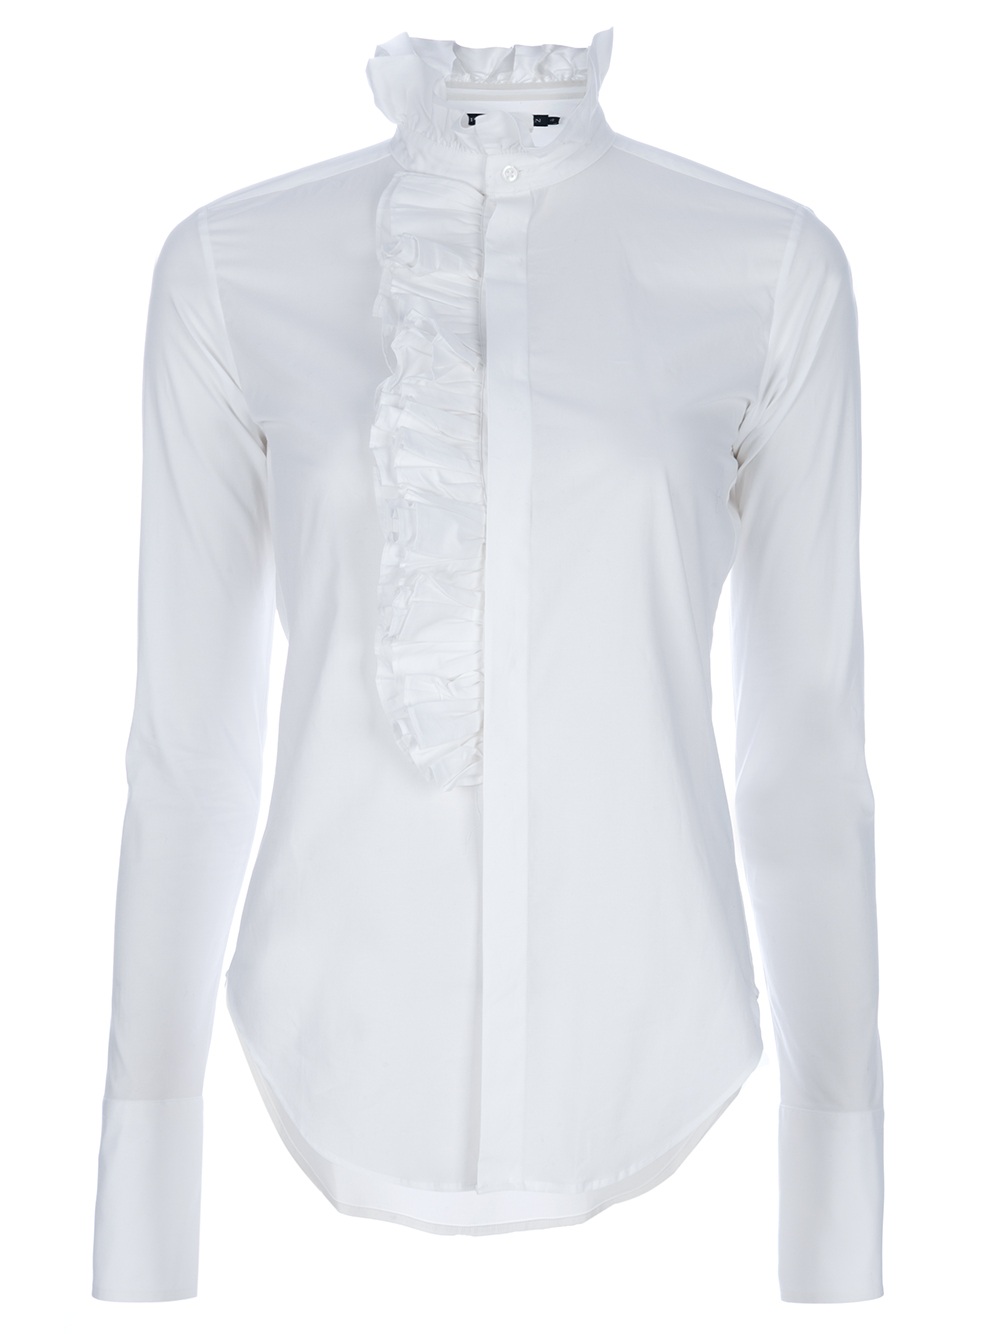 Ralph Lauren Blue Label Ruffle Detail Shirt in White - Lyst